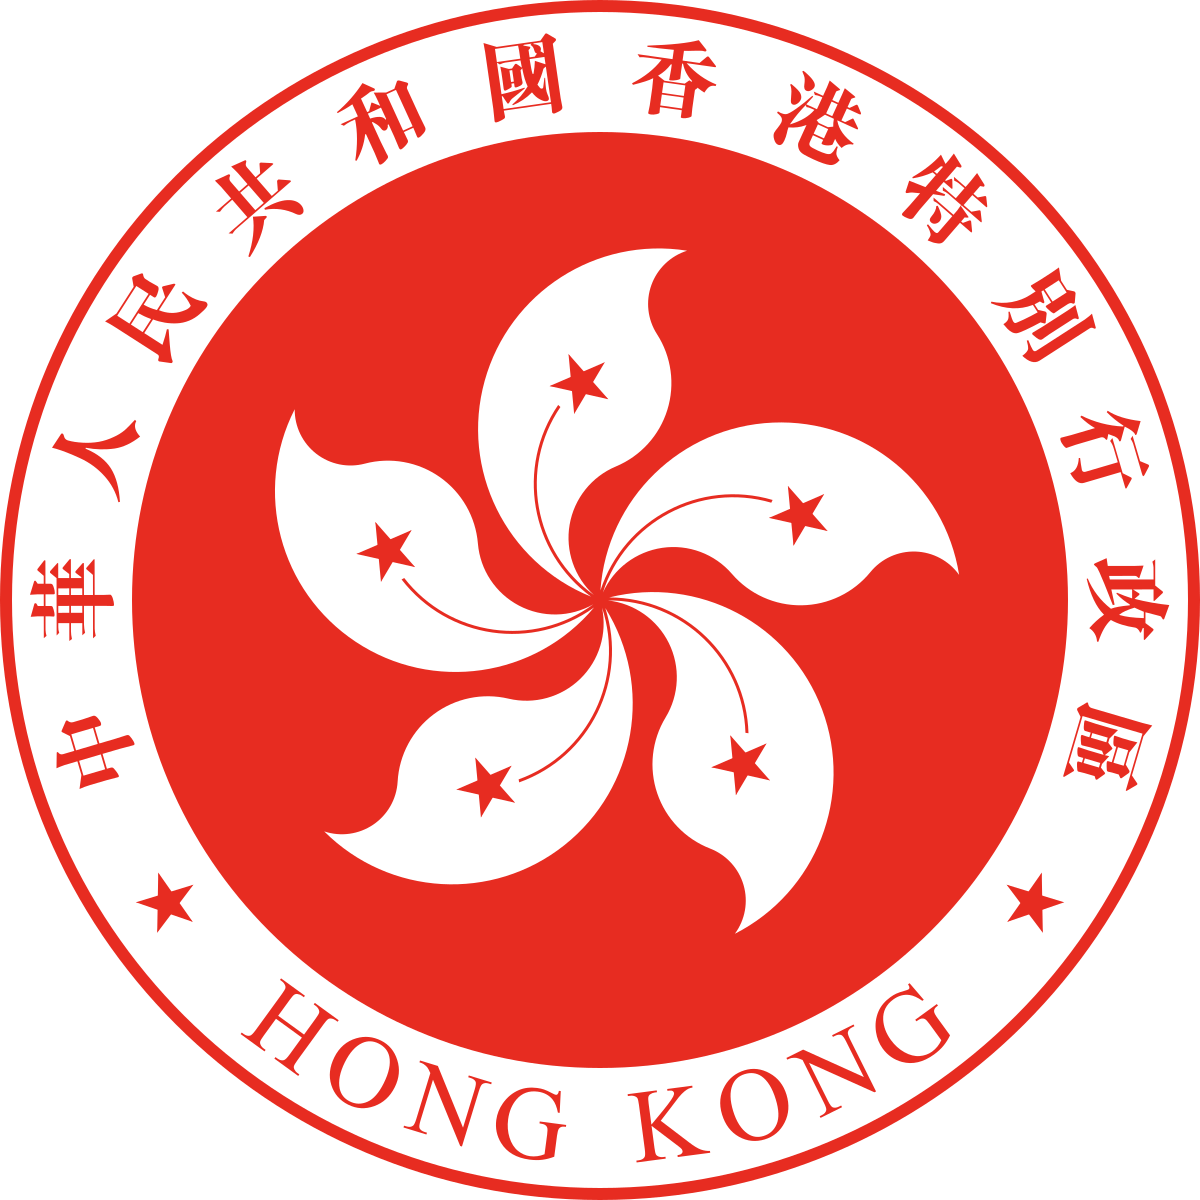 Hong Kong Regional emblem logo.